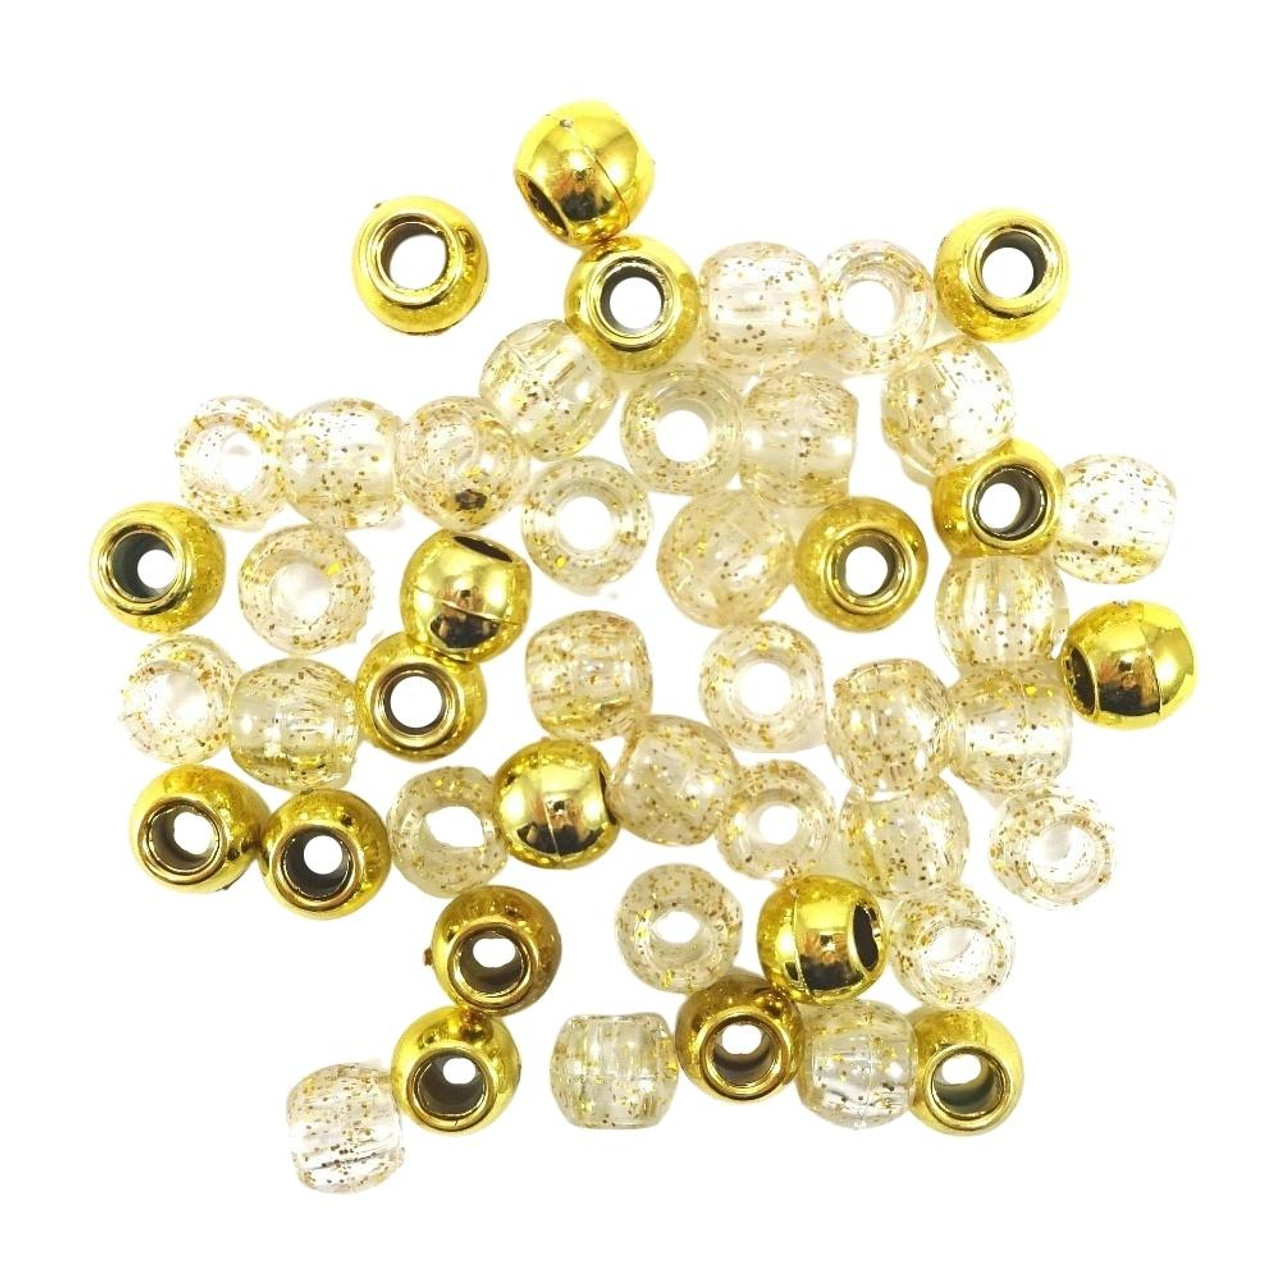 10mm Plastic Metallic/Glitter Hair Beads, Gold at I Kick Shins